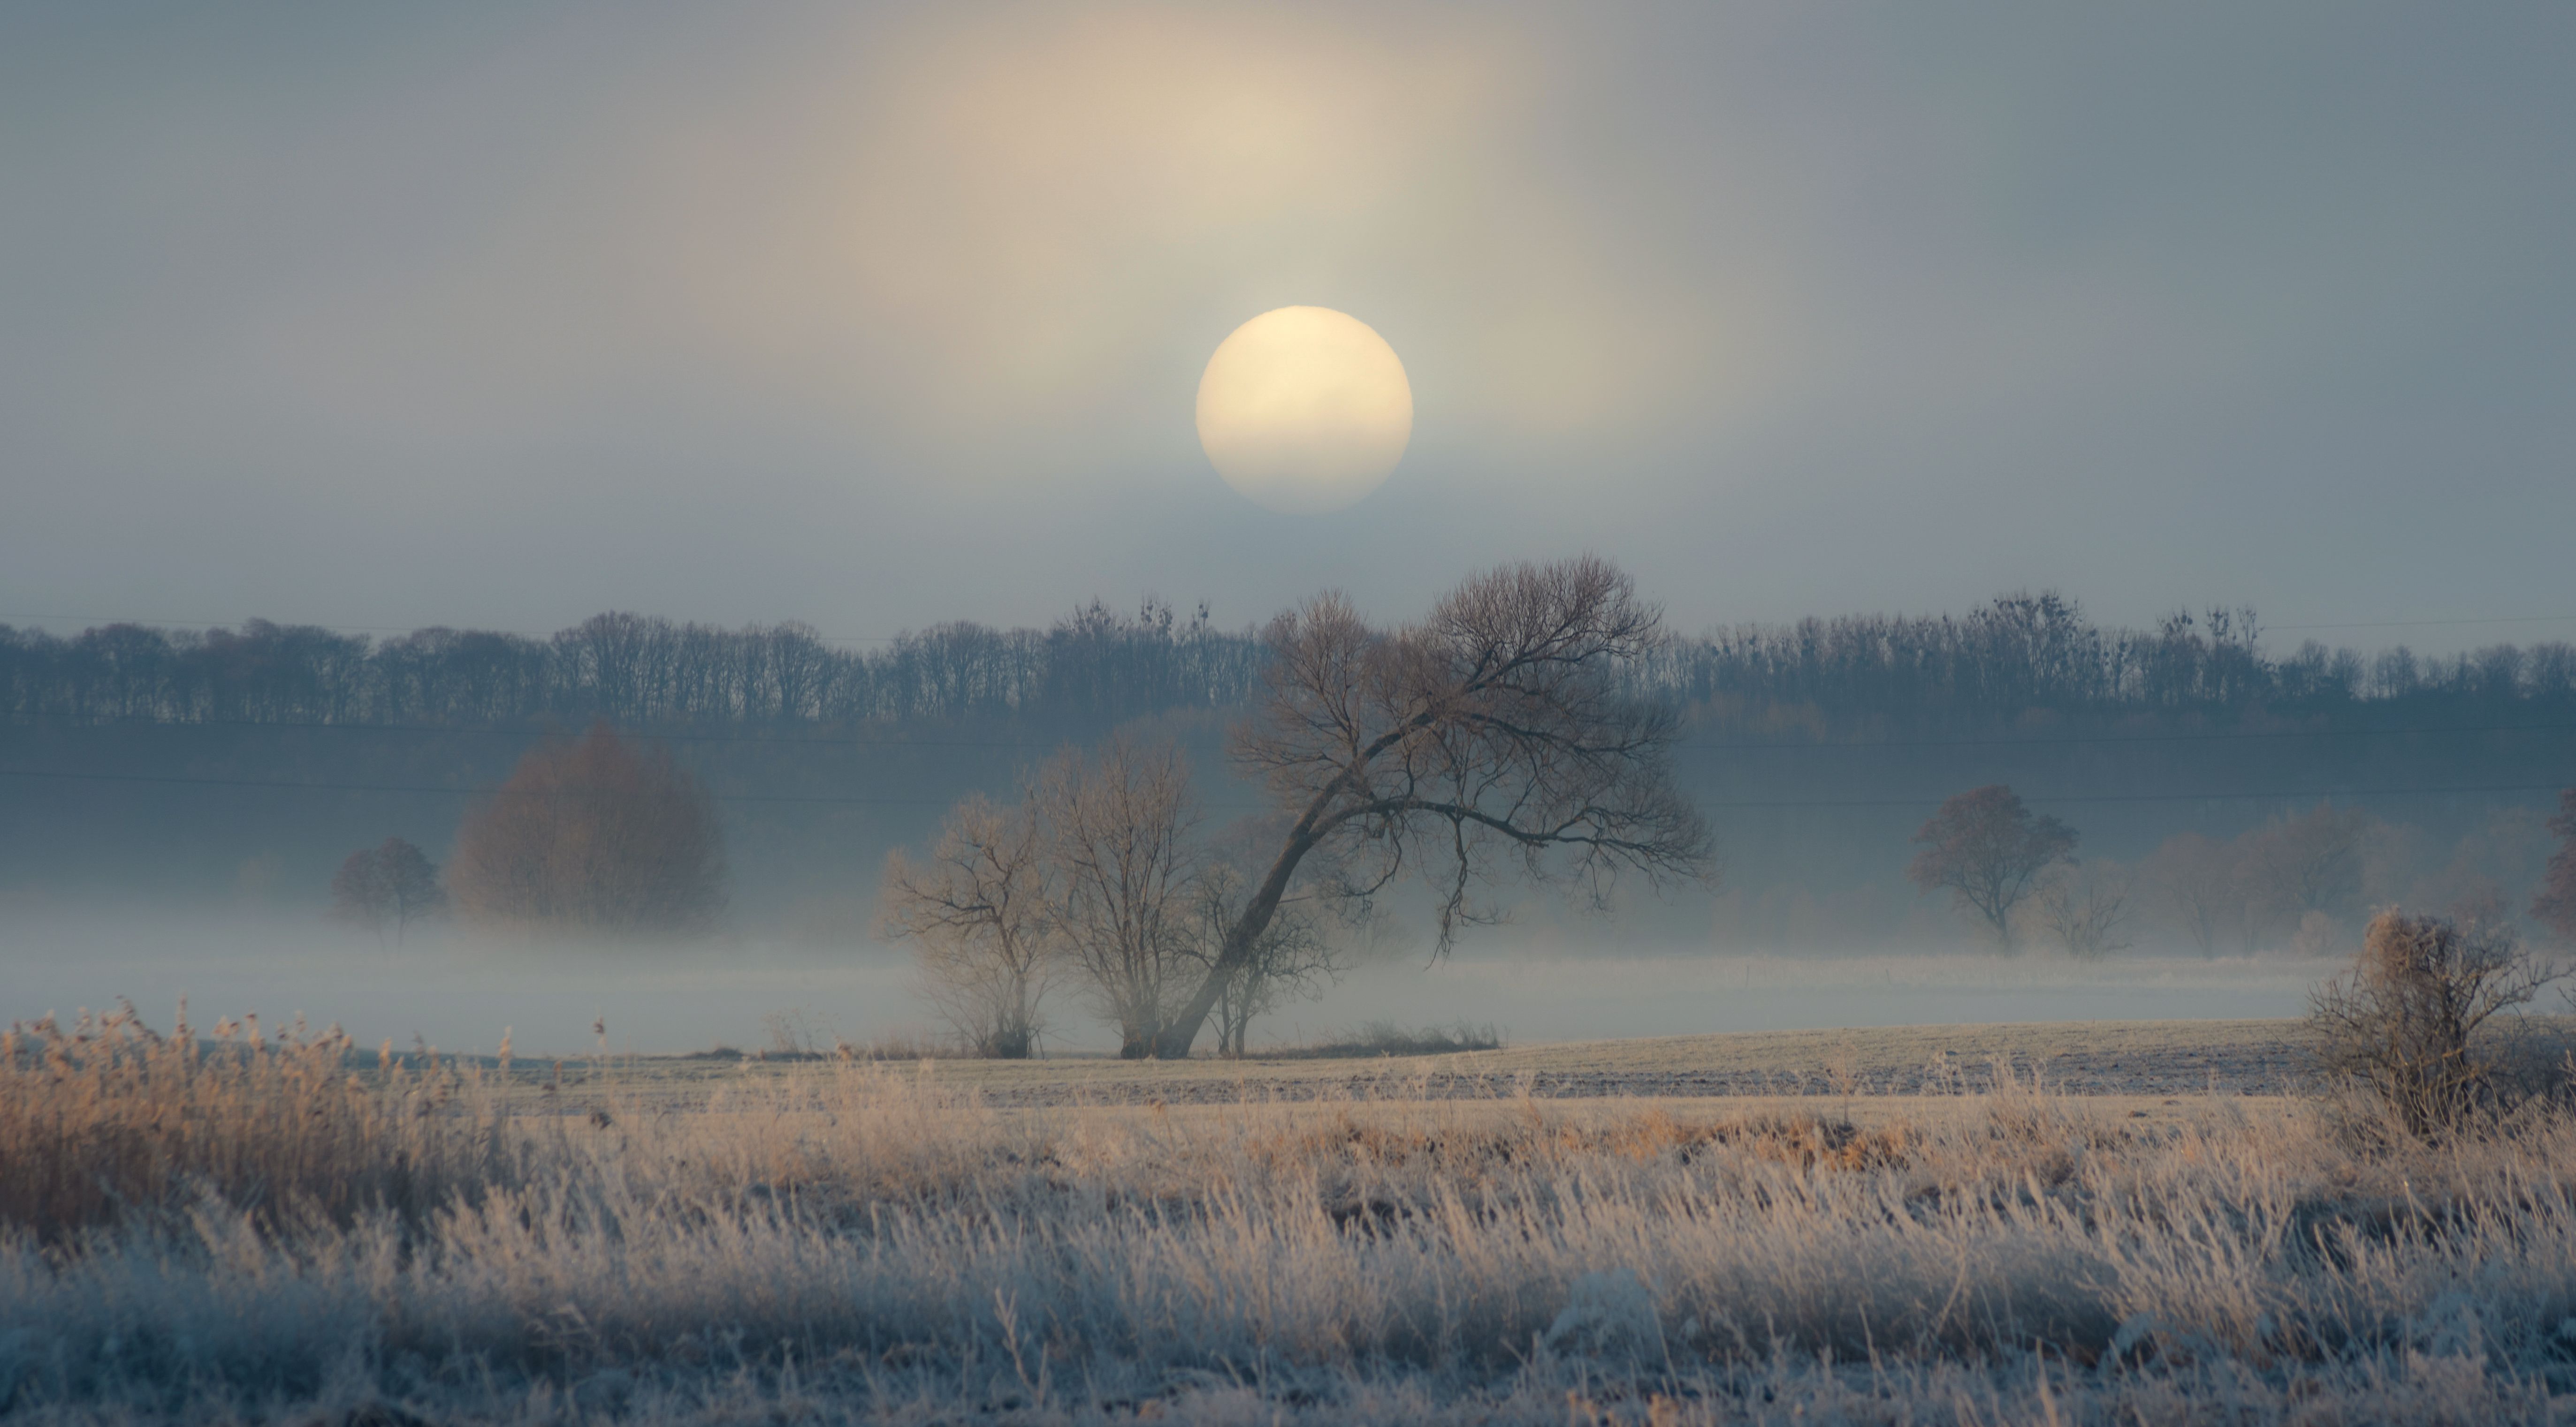 Tree  Nature  Fog  Landscape - Scenery  Agricultural Field  Sky  Scenics - Nature  Winter  Sun  Nikon  Forest  Light, Krzysztof Tollas